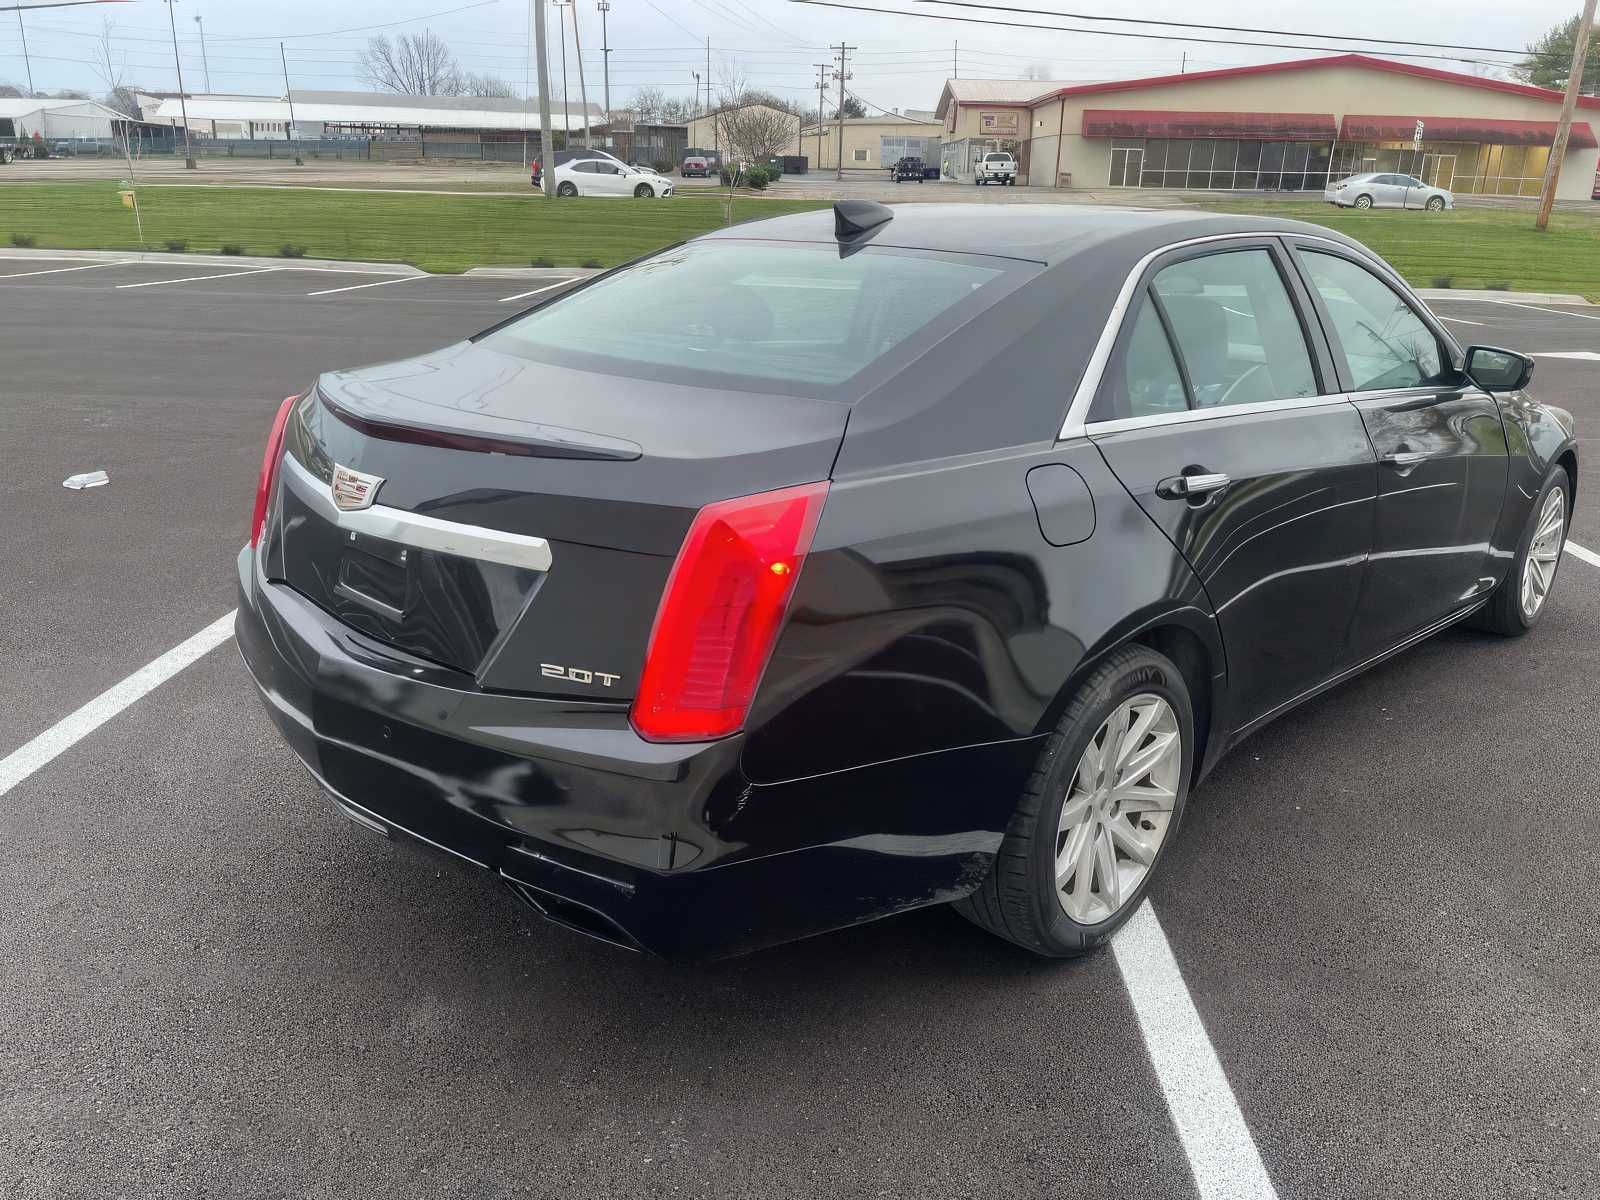 2015 Cadillac CTS Luxury